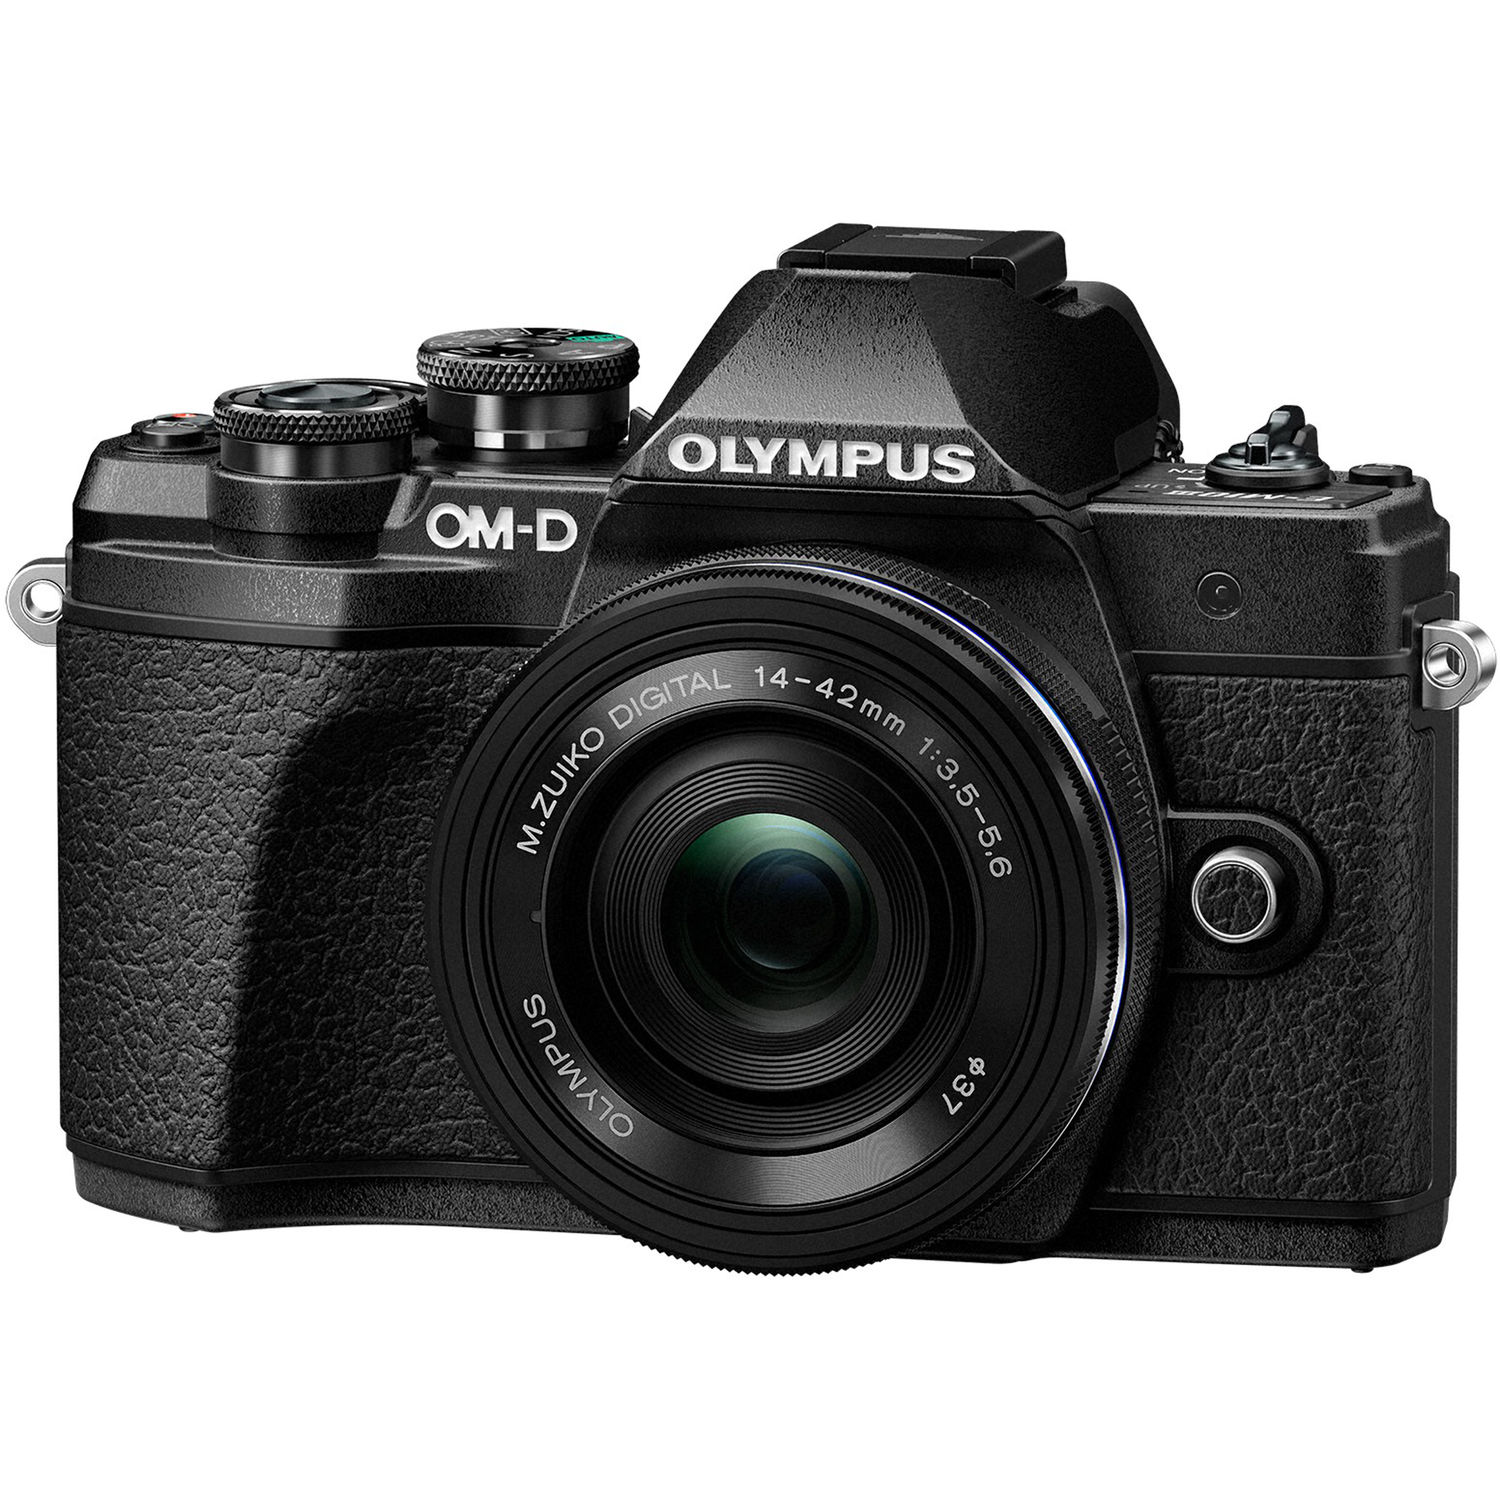 Olympus OM-D E-M10 Mark III Mirrorless  Micro Four Thirds Digital Camera with 14-42mm EZ Lens - Black